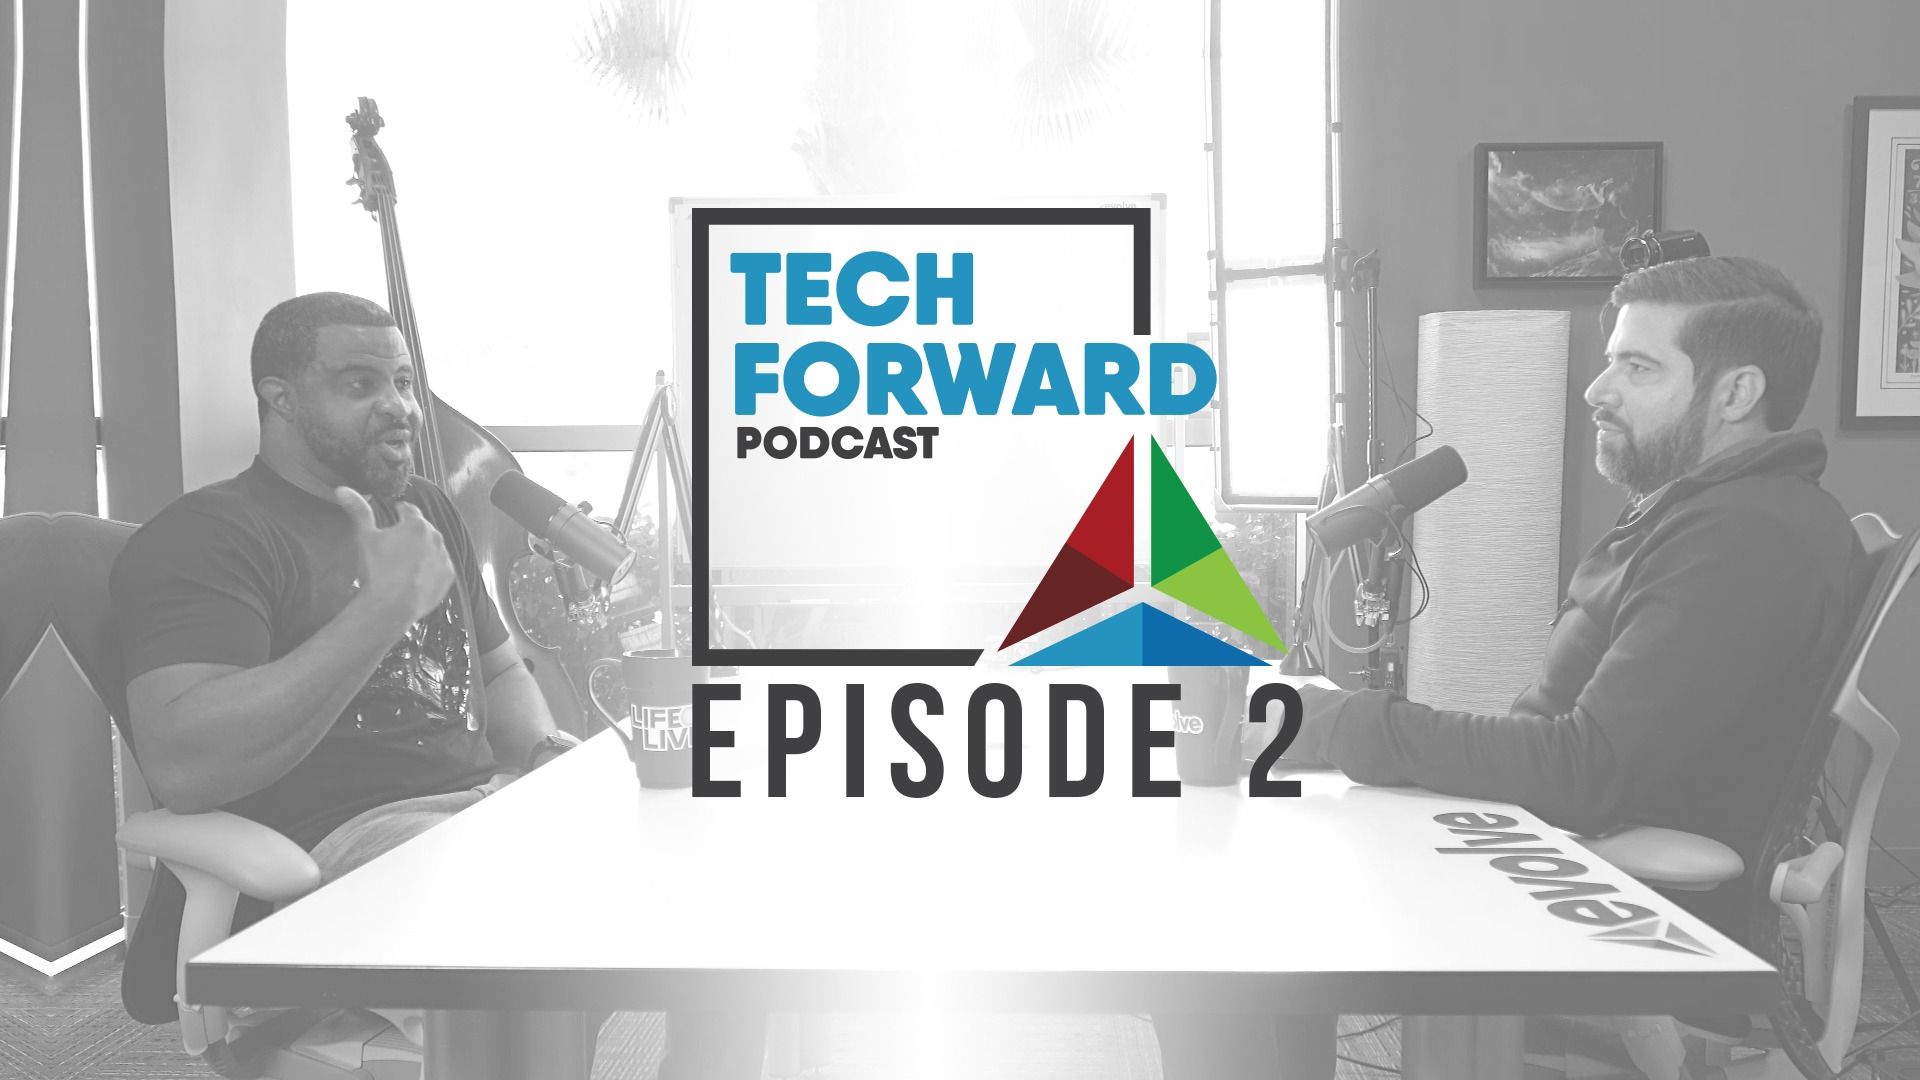 Tech forward podcast episode 2.